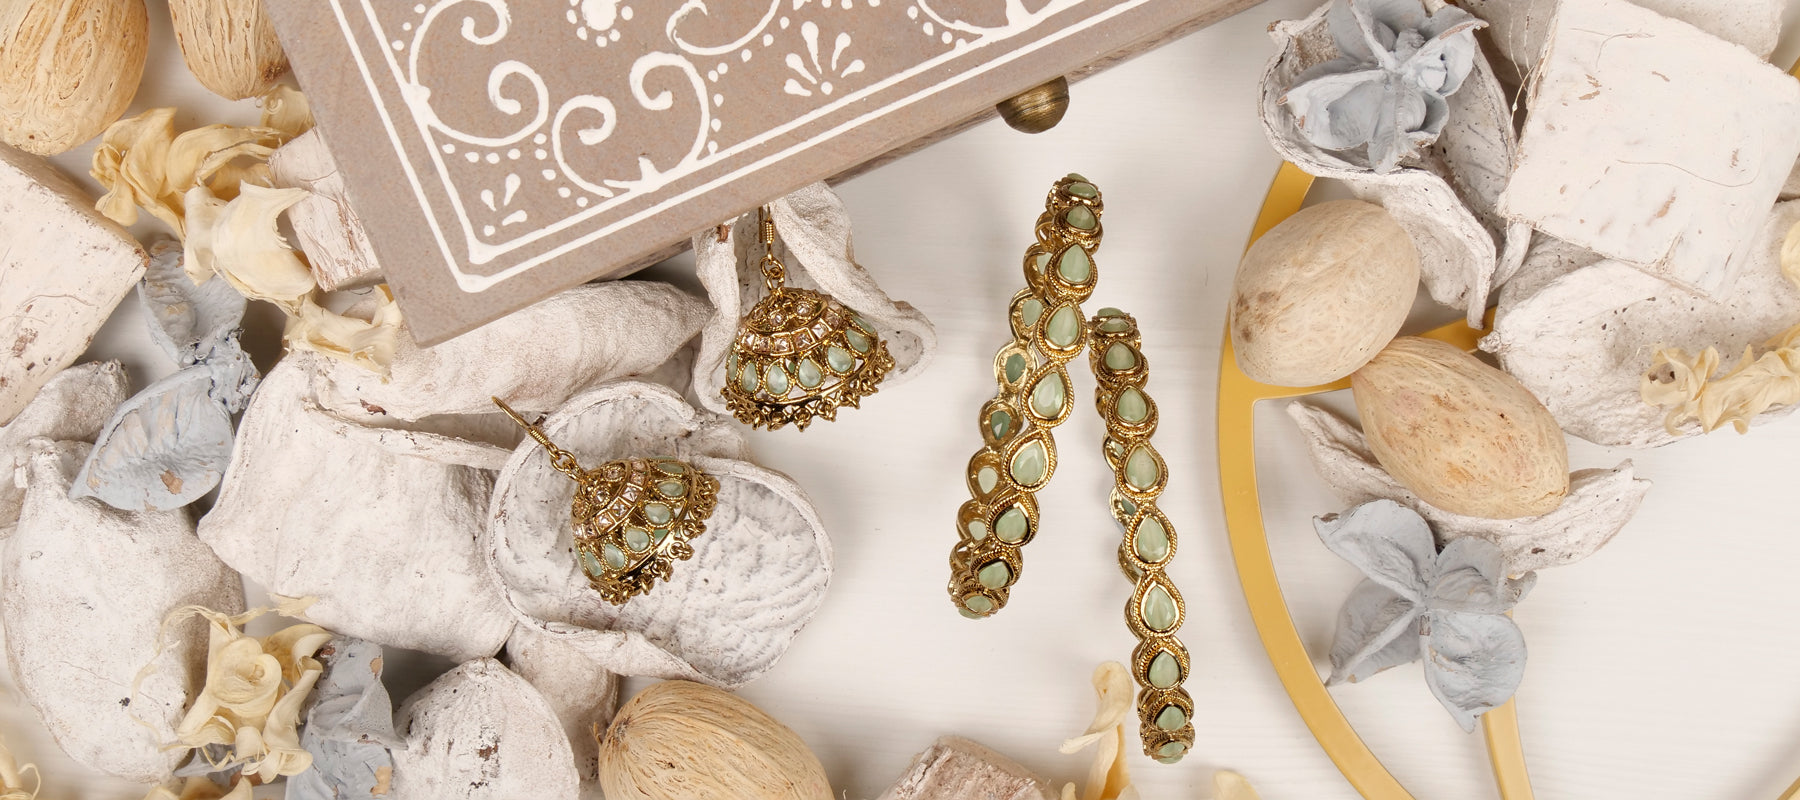 bees jewellery bangles and jhumka earrings